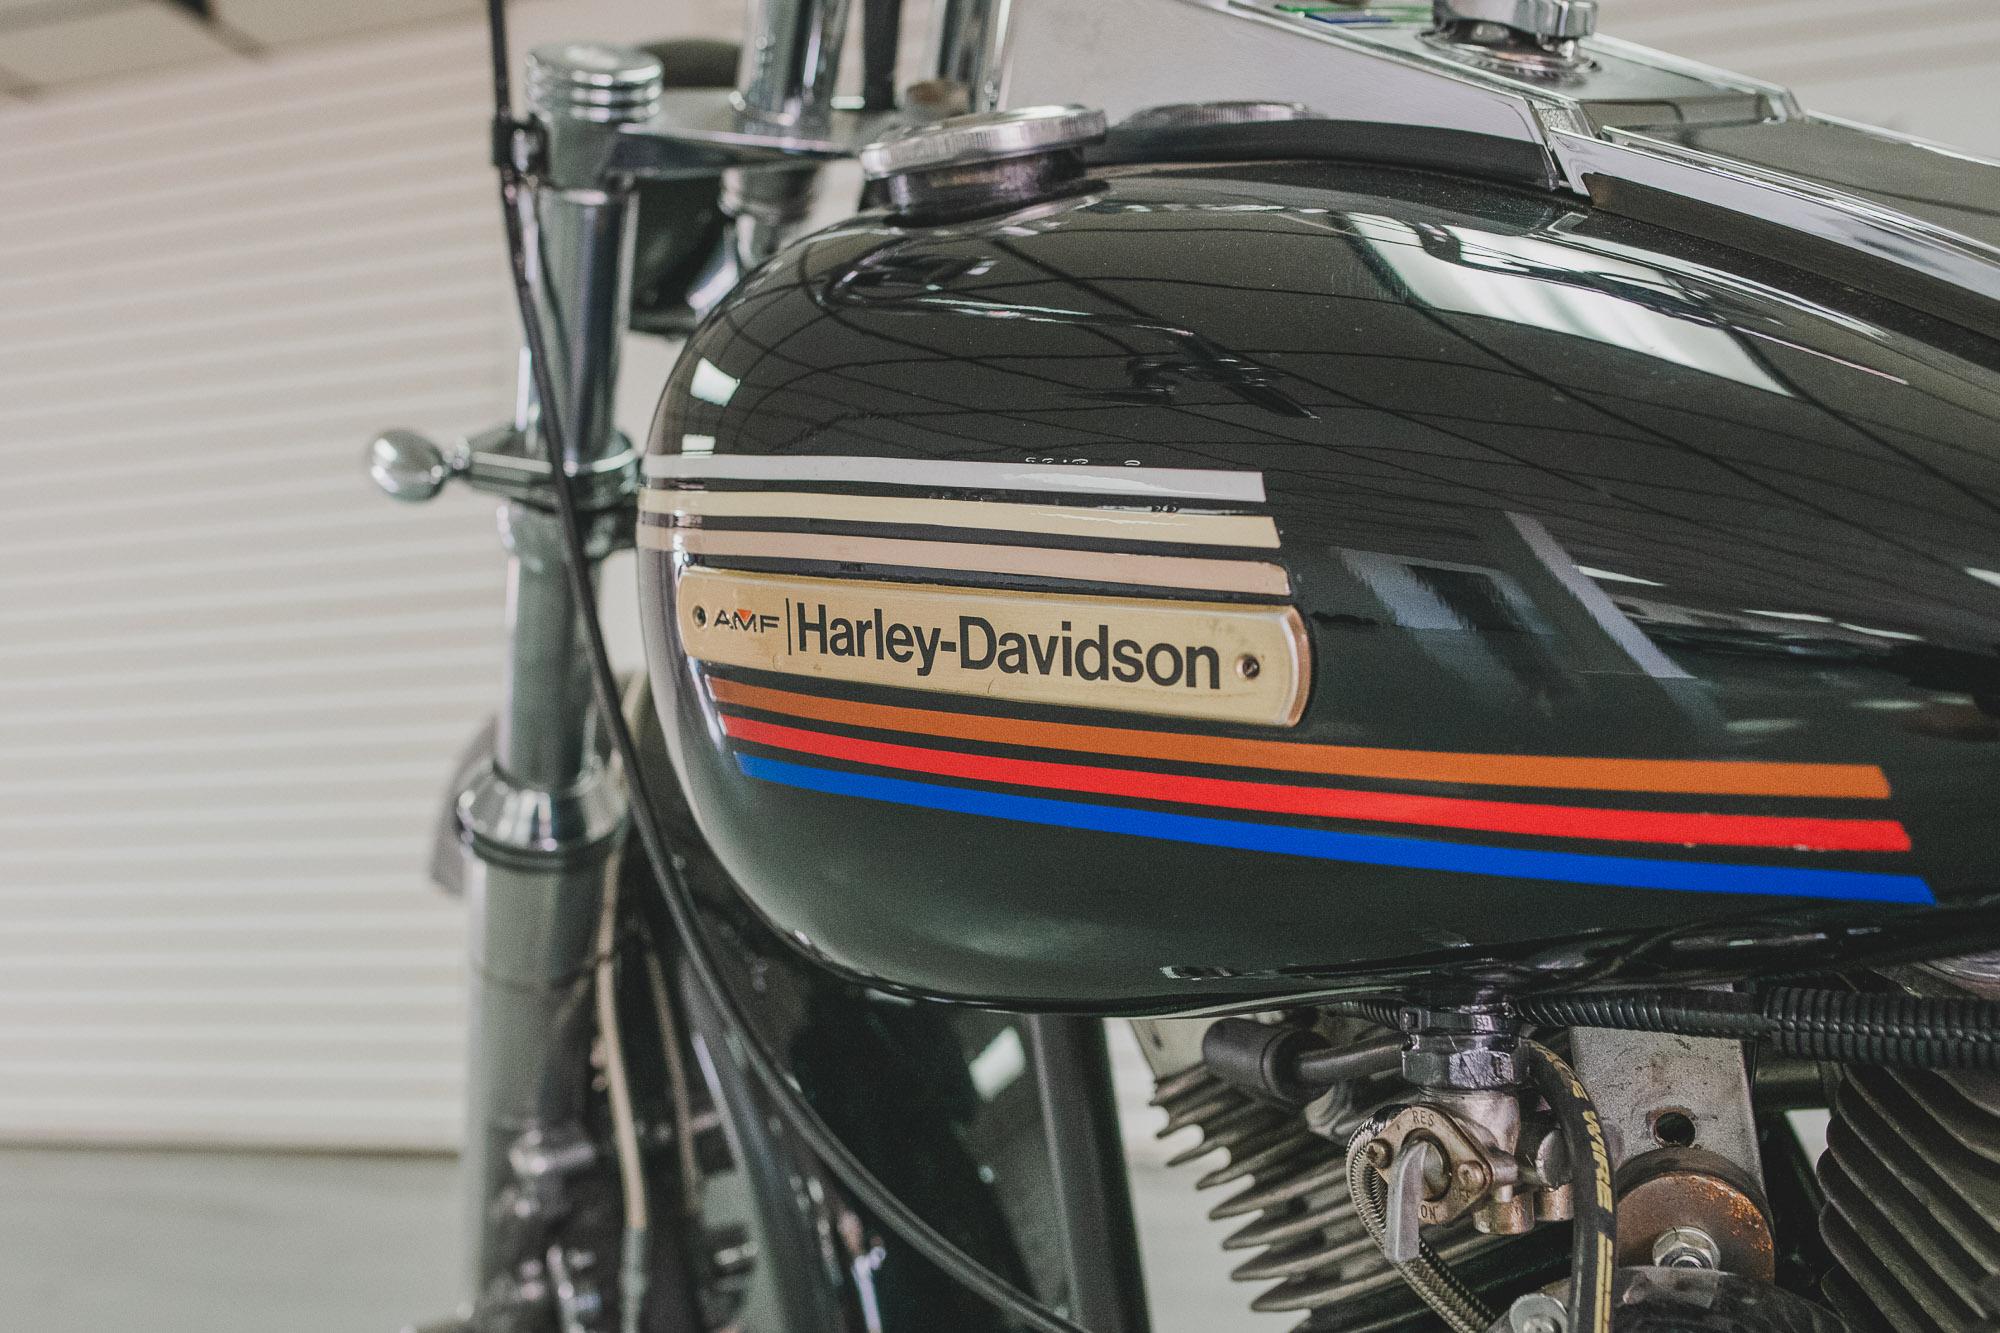 1976 AMF Harley Davidson Miles Show: 1,682